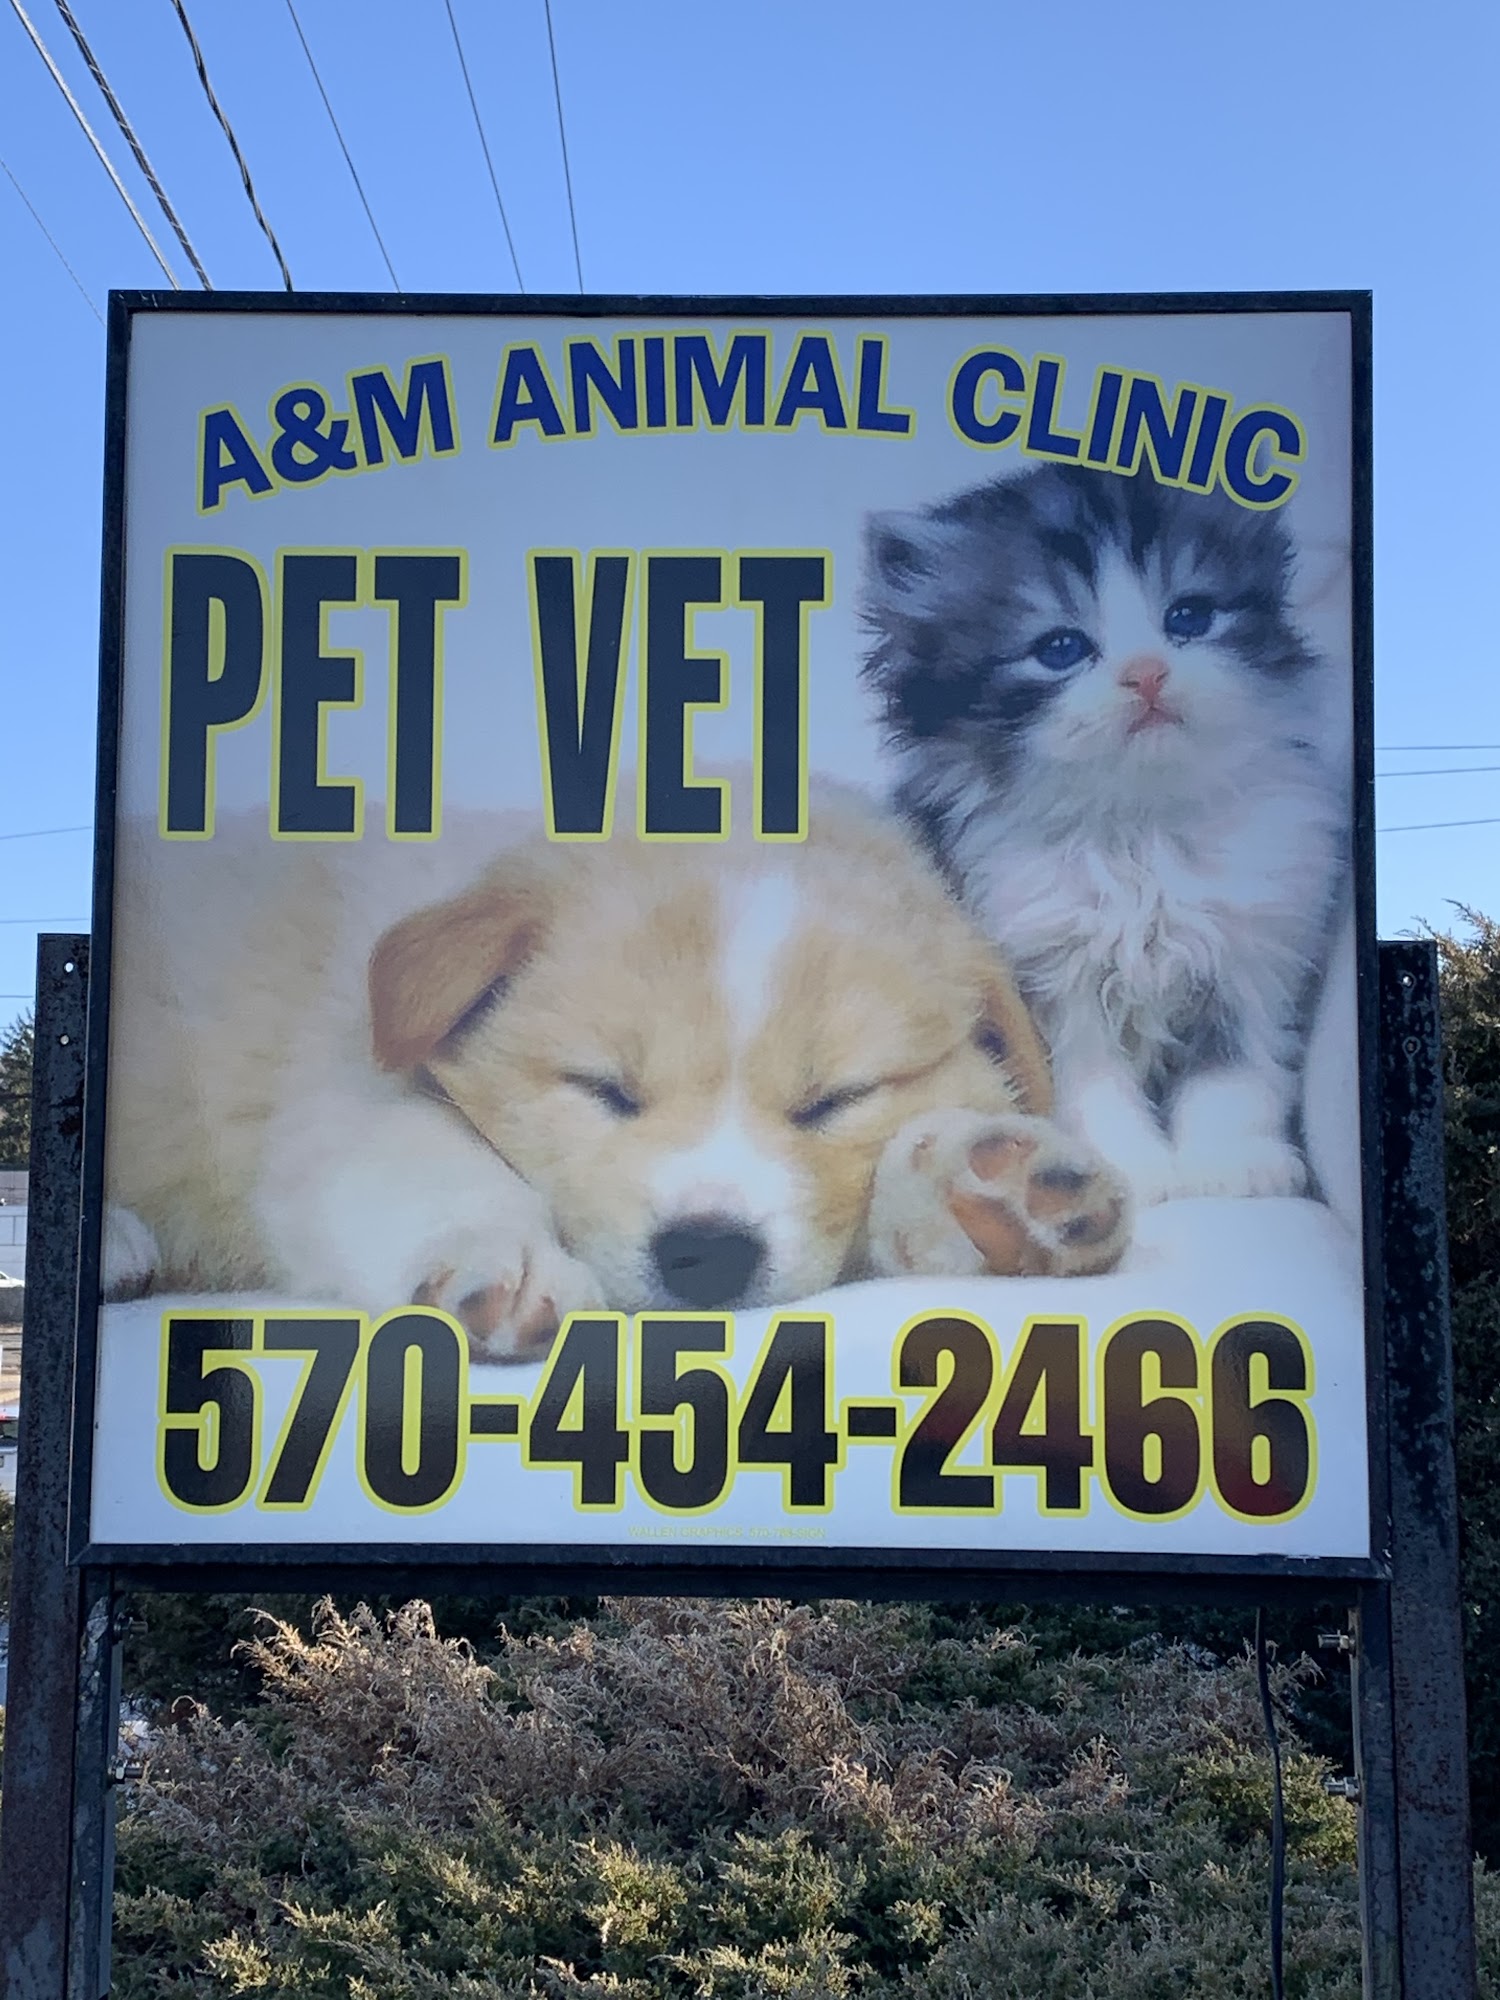 A&M Animal Clinic